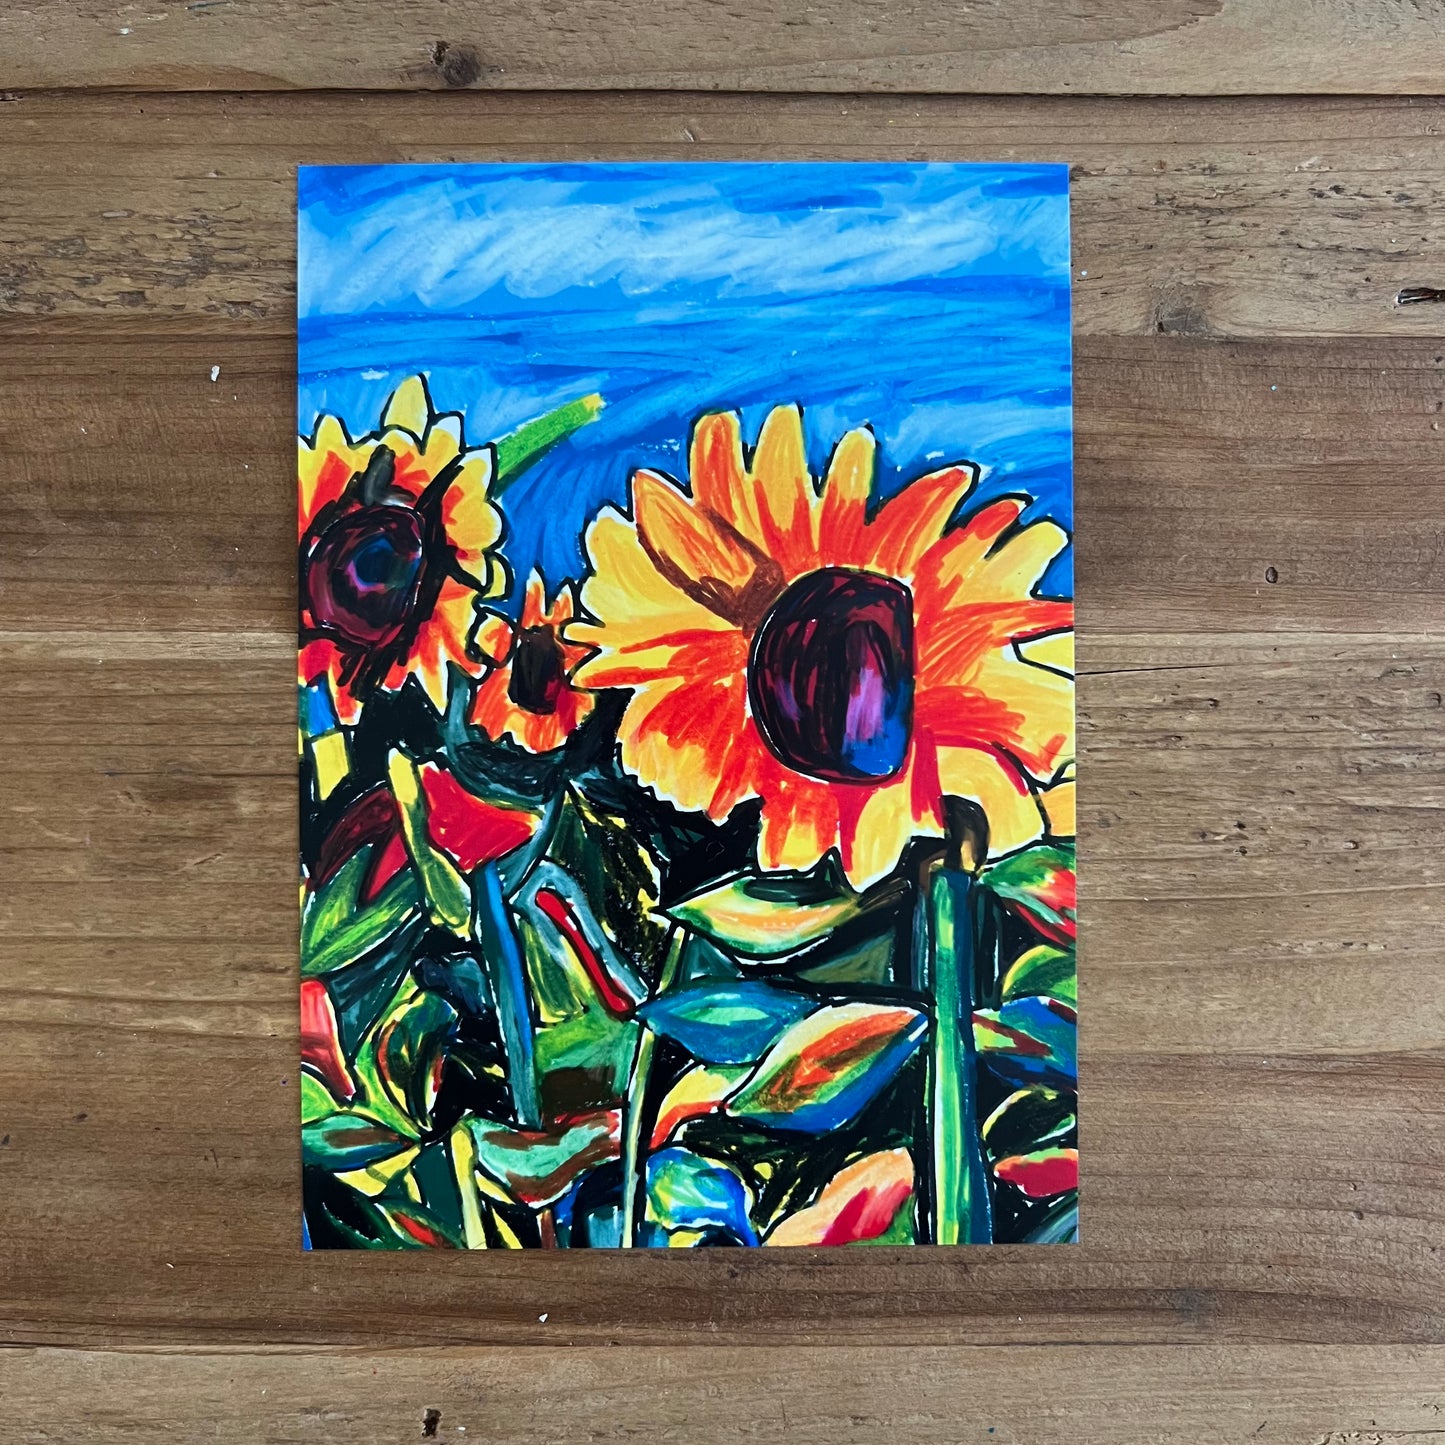 Sunflower Heaven - Set of 6 prints/canvas prints